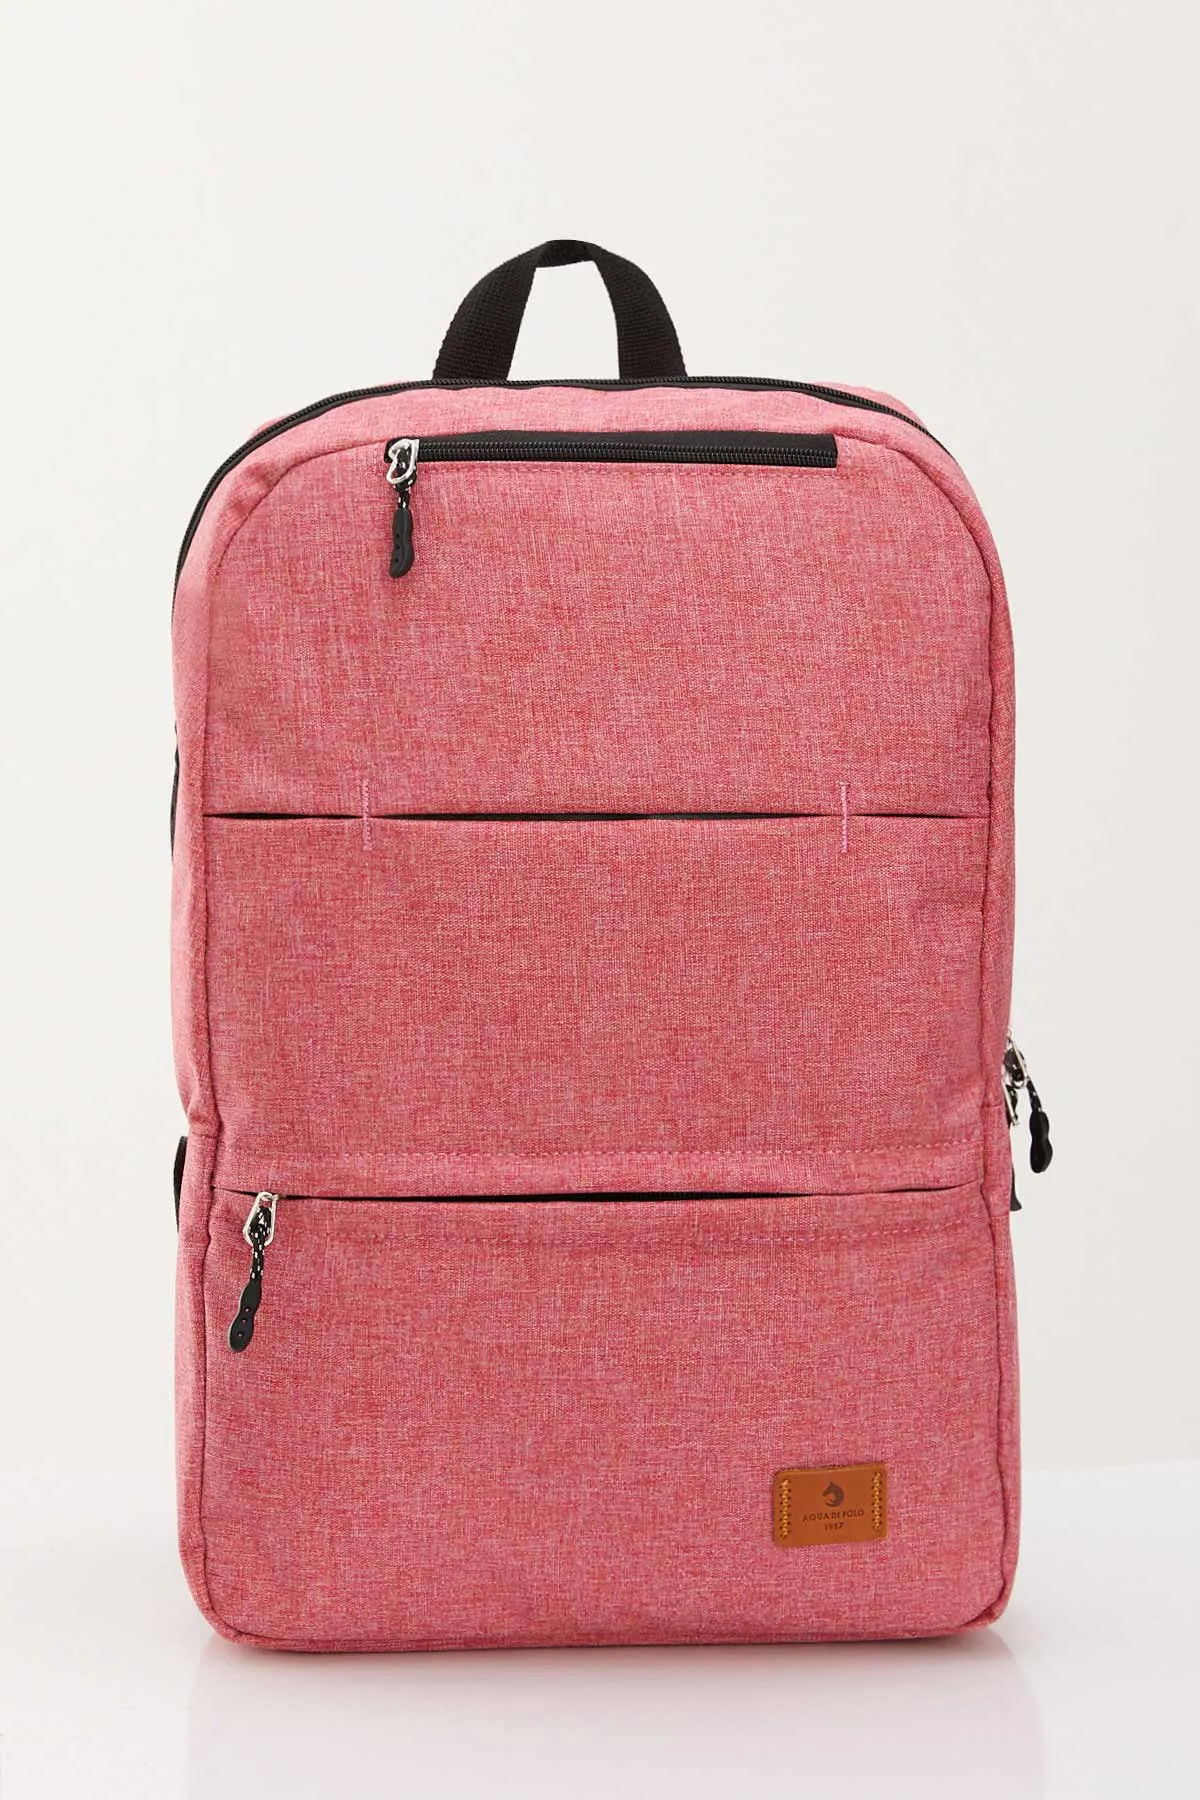 Рюкзак унисекс Di Polo apba0109 розовый#1